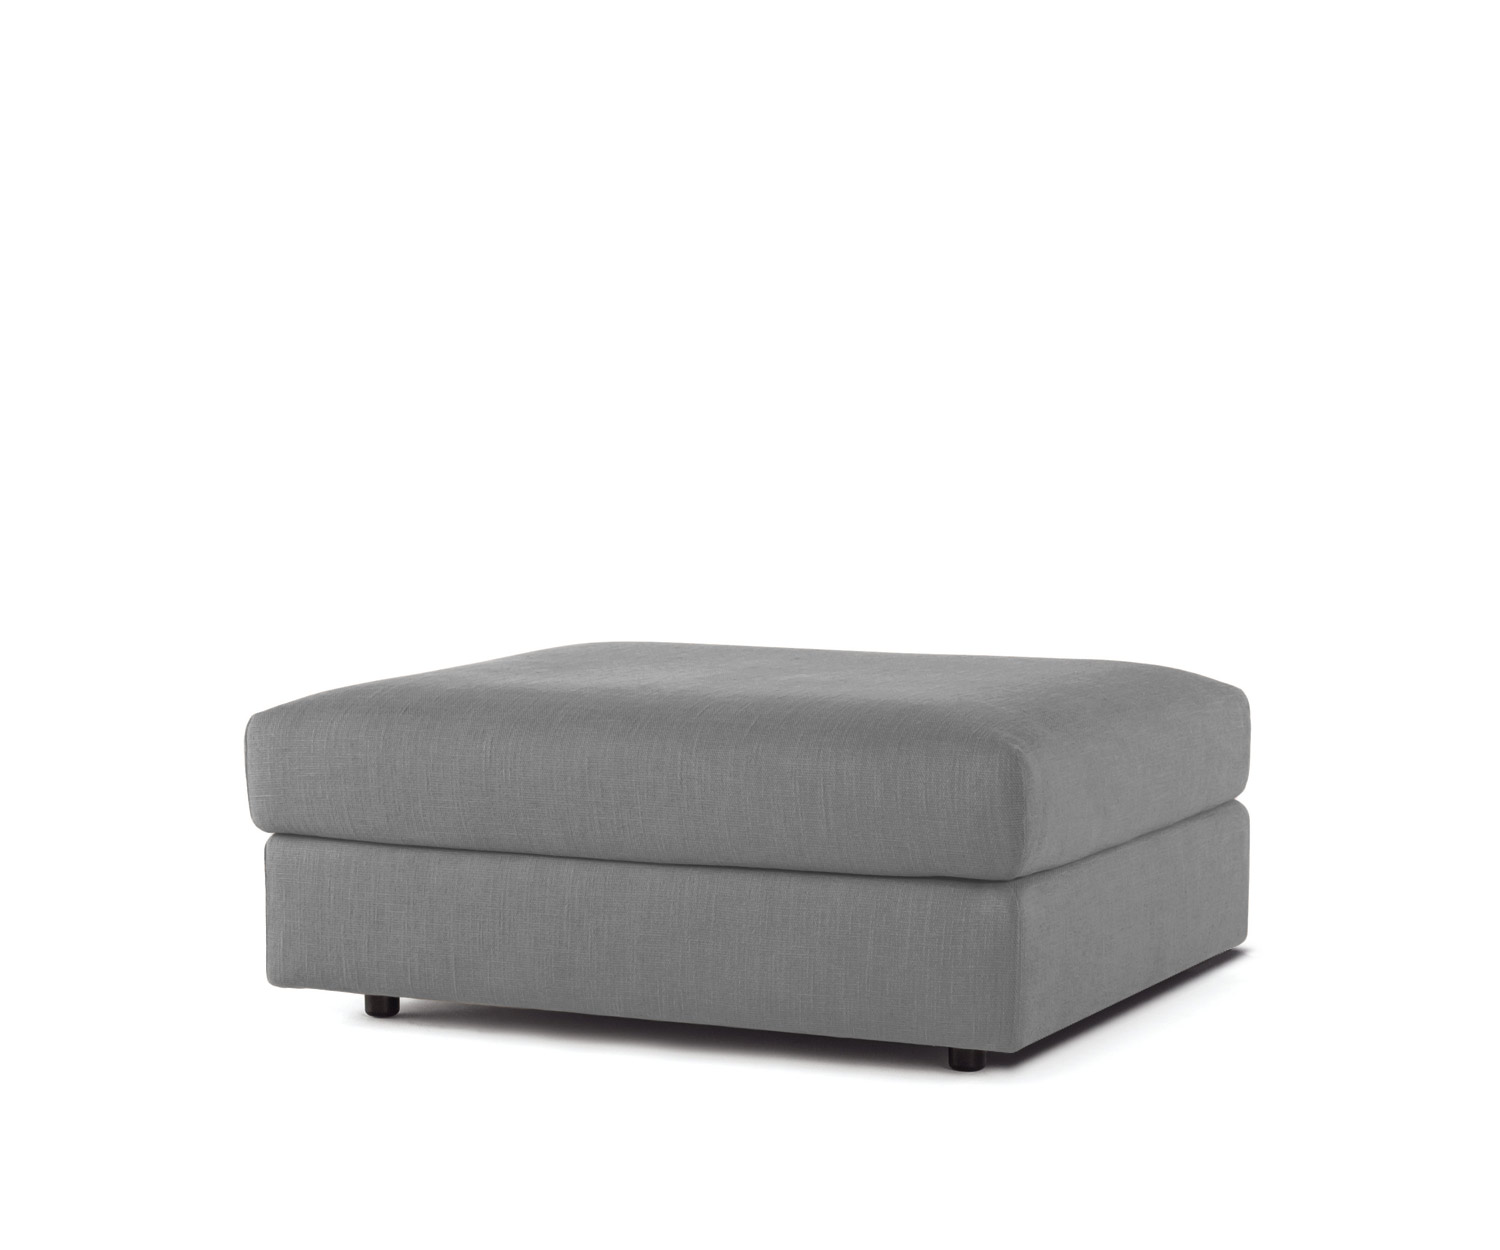 Exclusive Prostoria Classic pouf design stool in grey